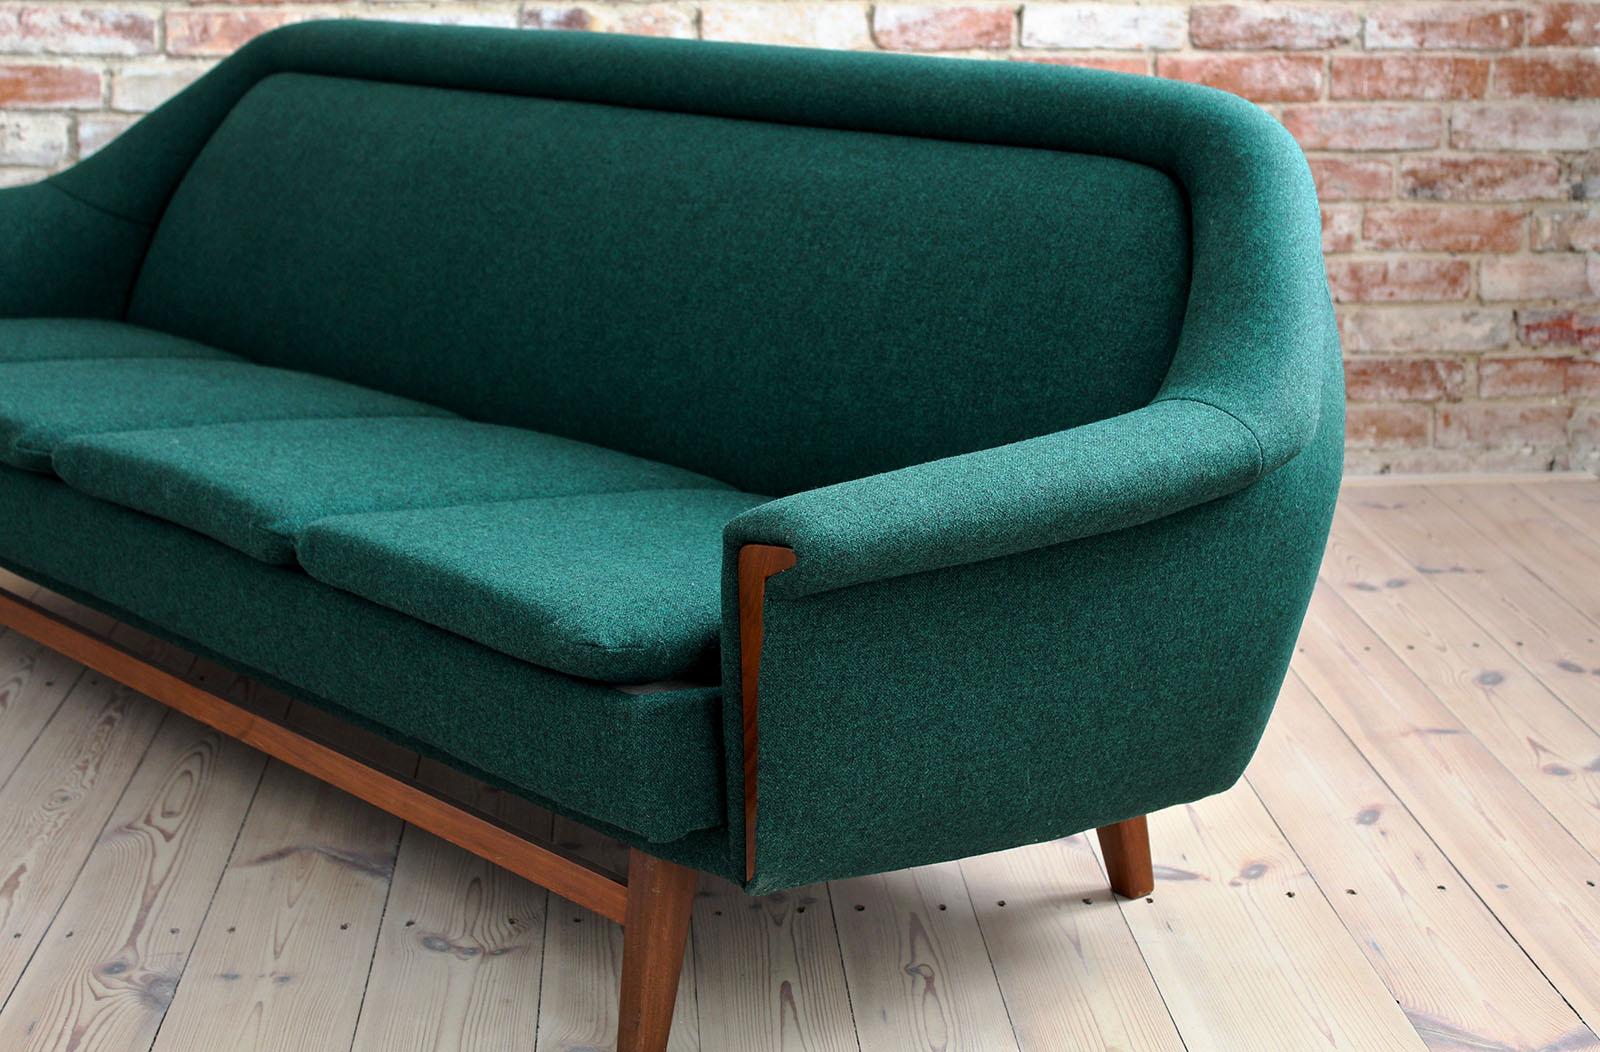 Mid-20th Century Sofa Set by Holm Fabriker in Emerald Green Kvadrat Fabric, Mid-Century Modern